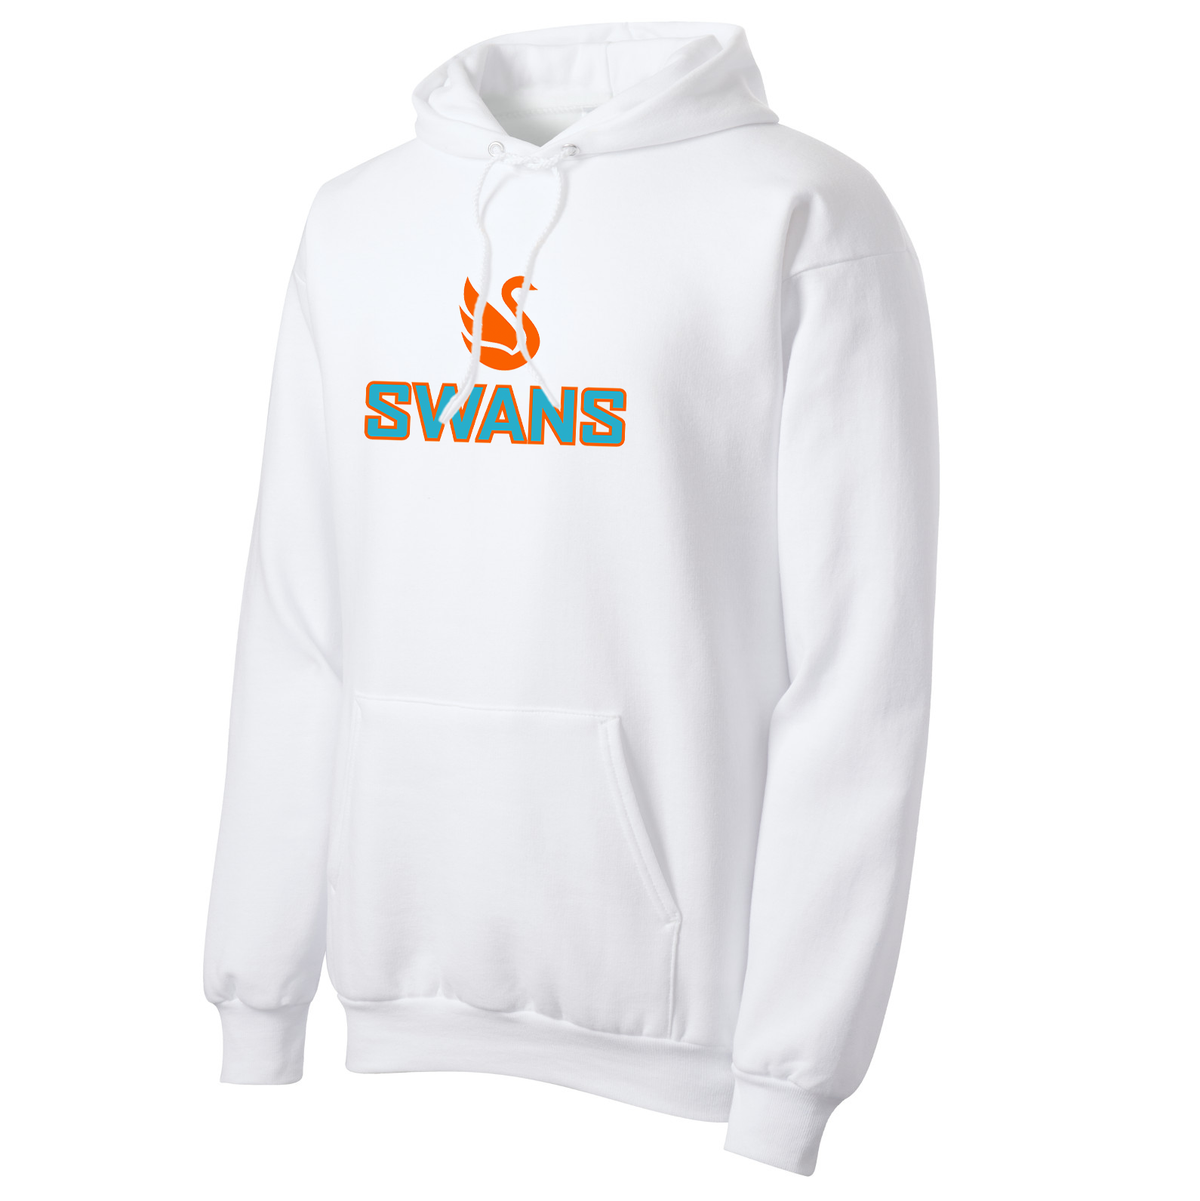 Swans Lacrosse Sweatshirt